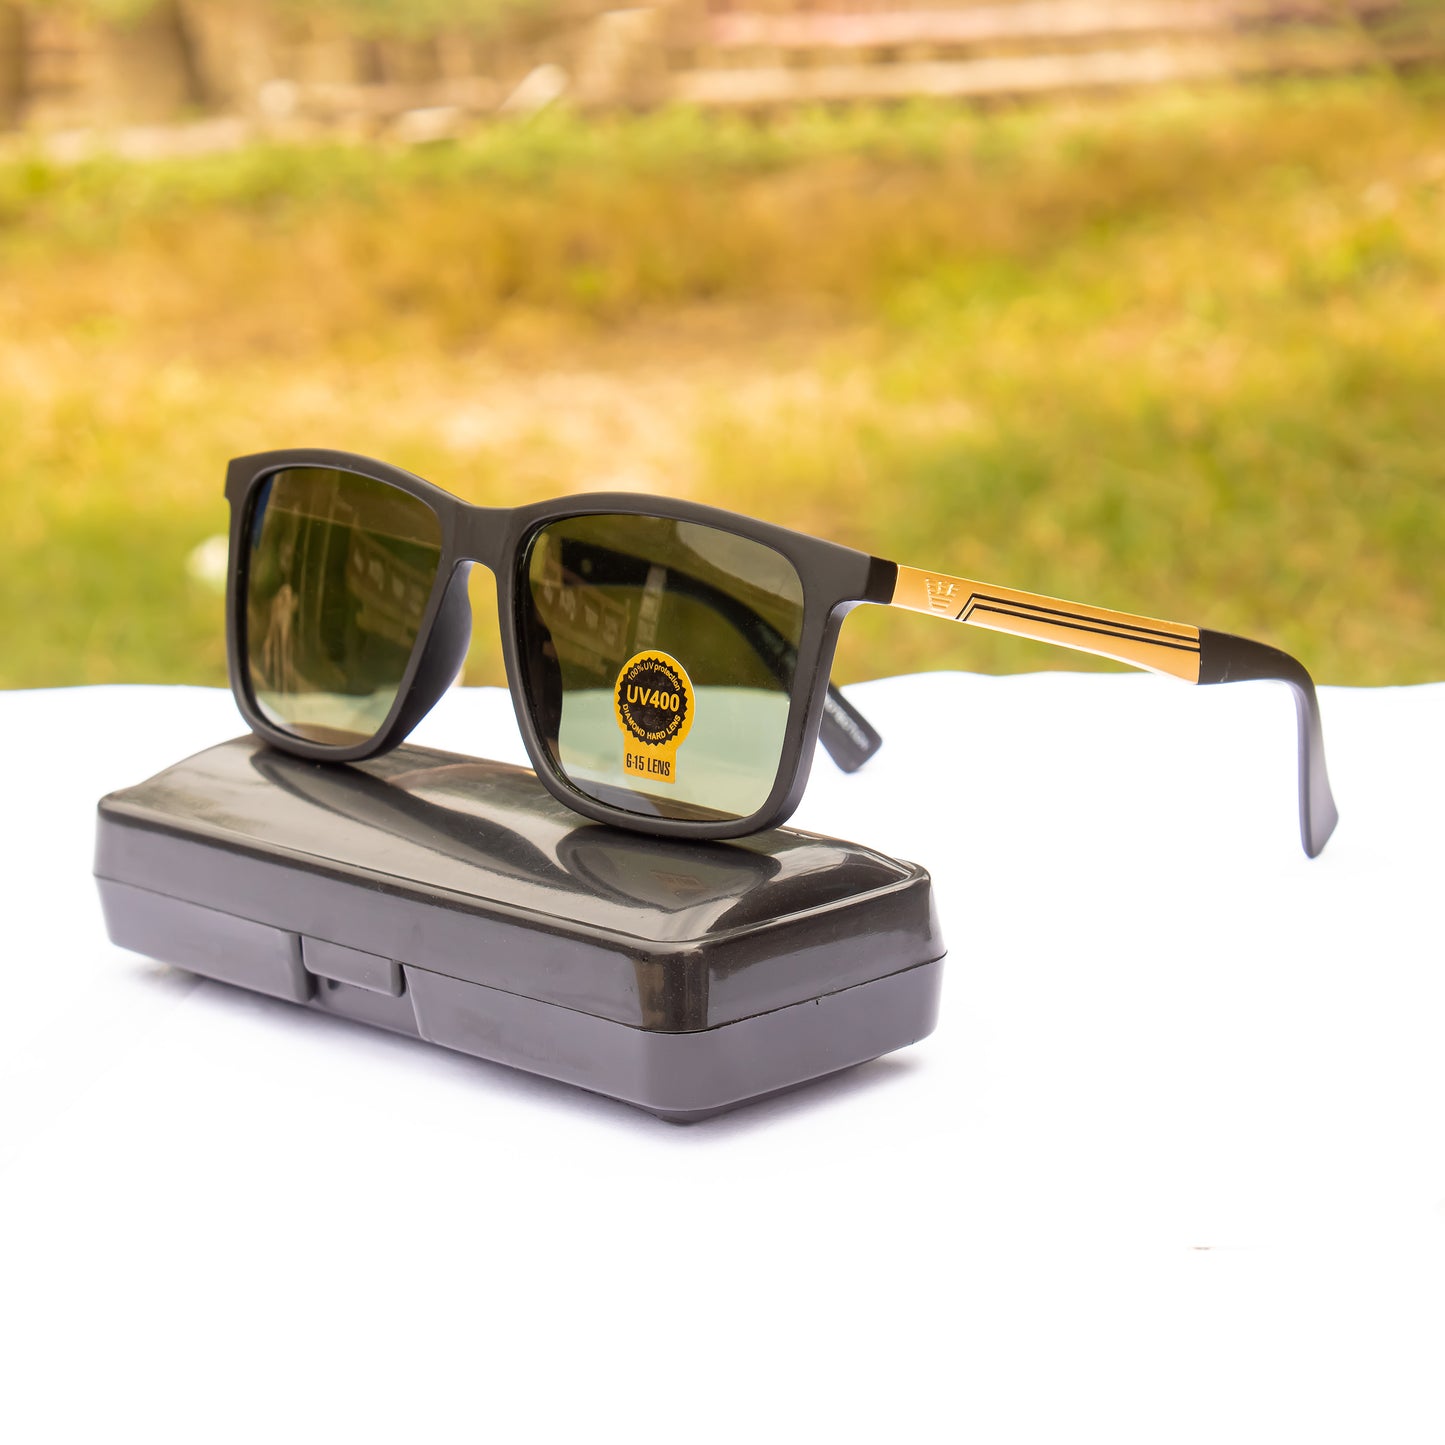 Jiebo Classic Design Square Frame Sunglasses For Men